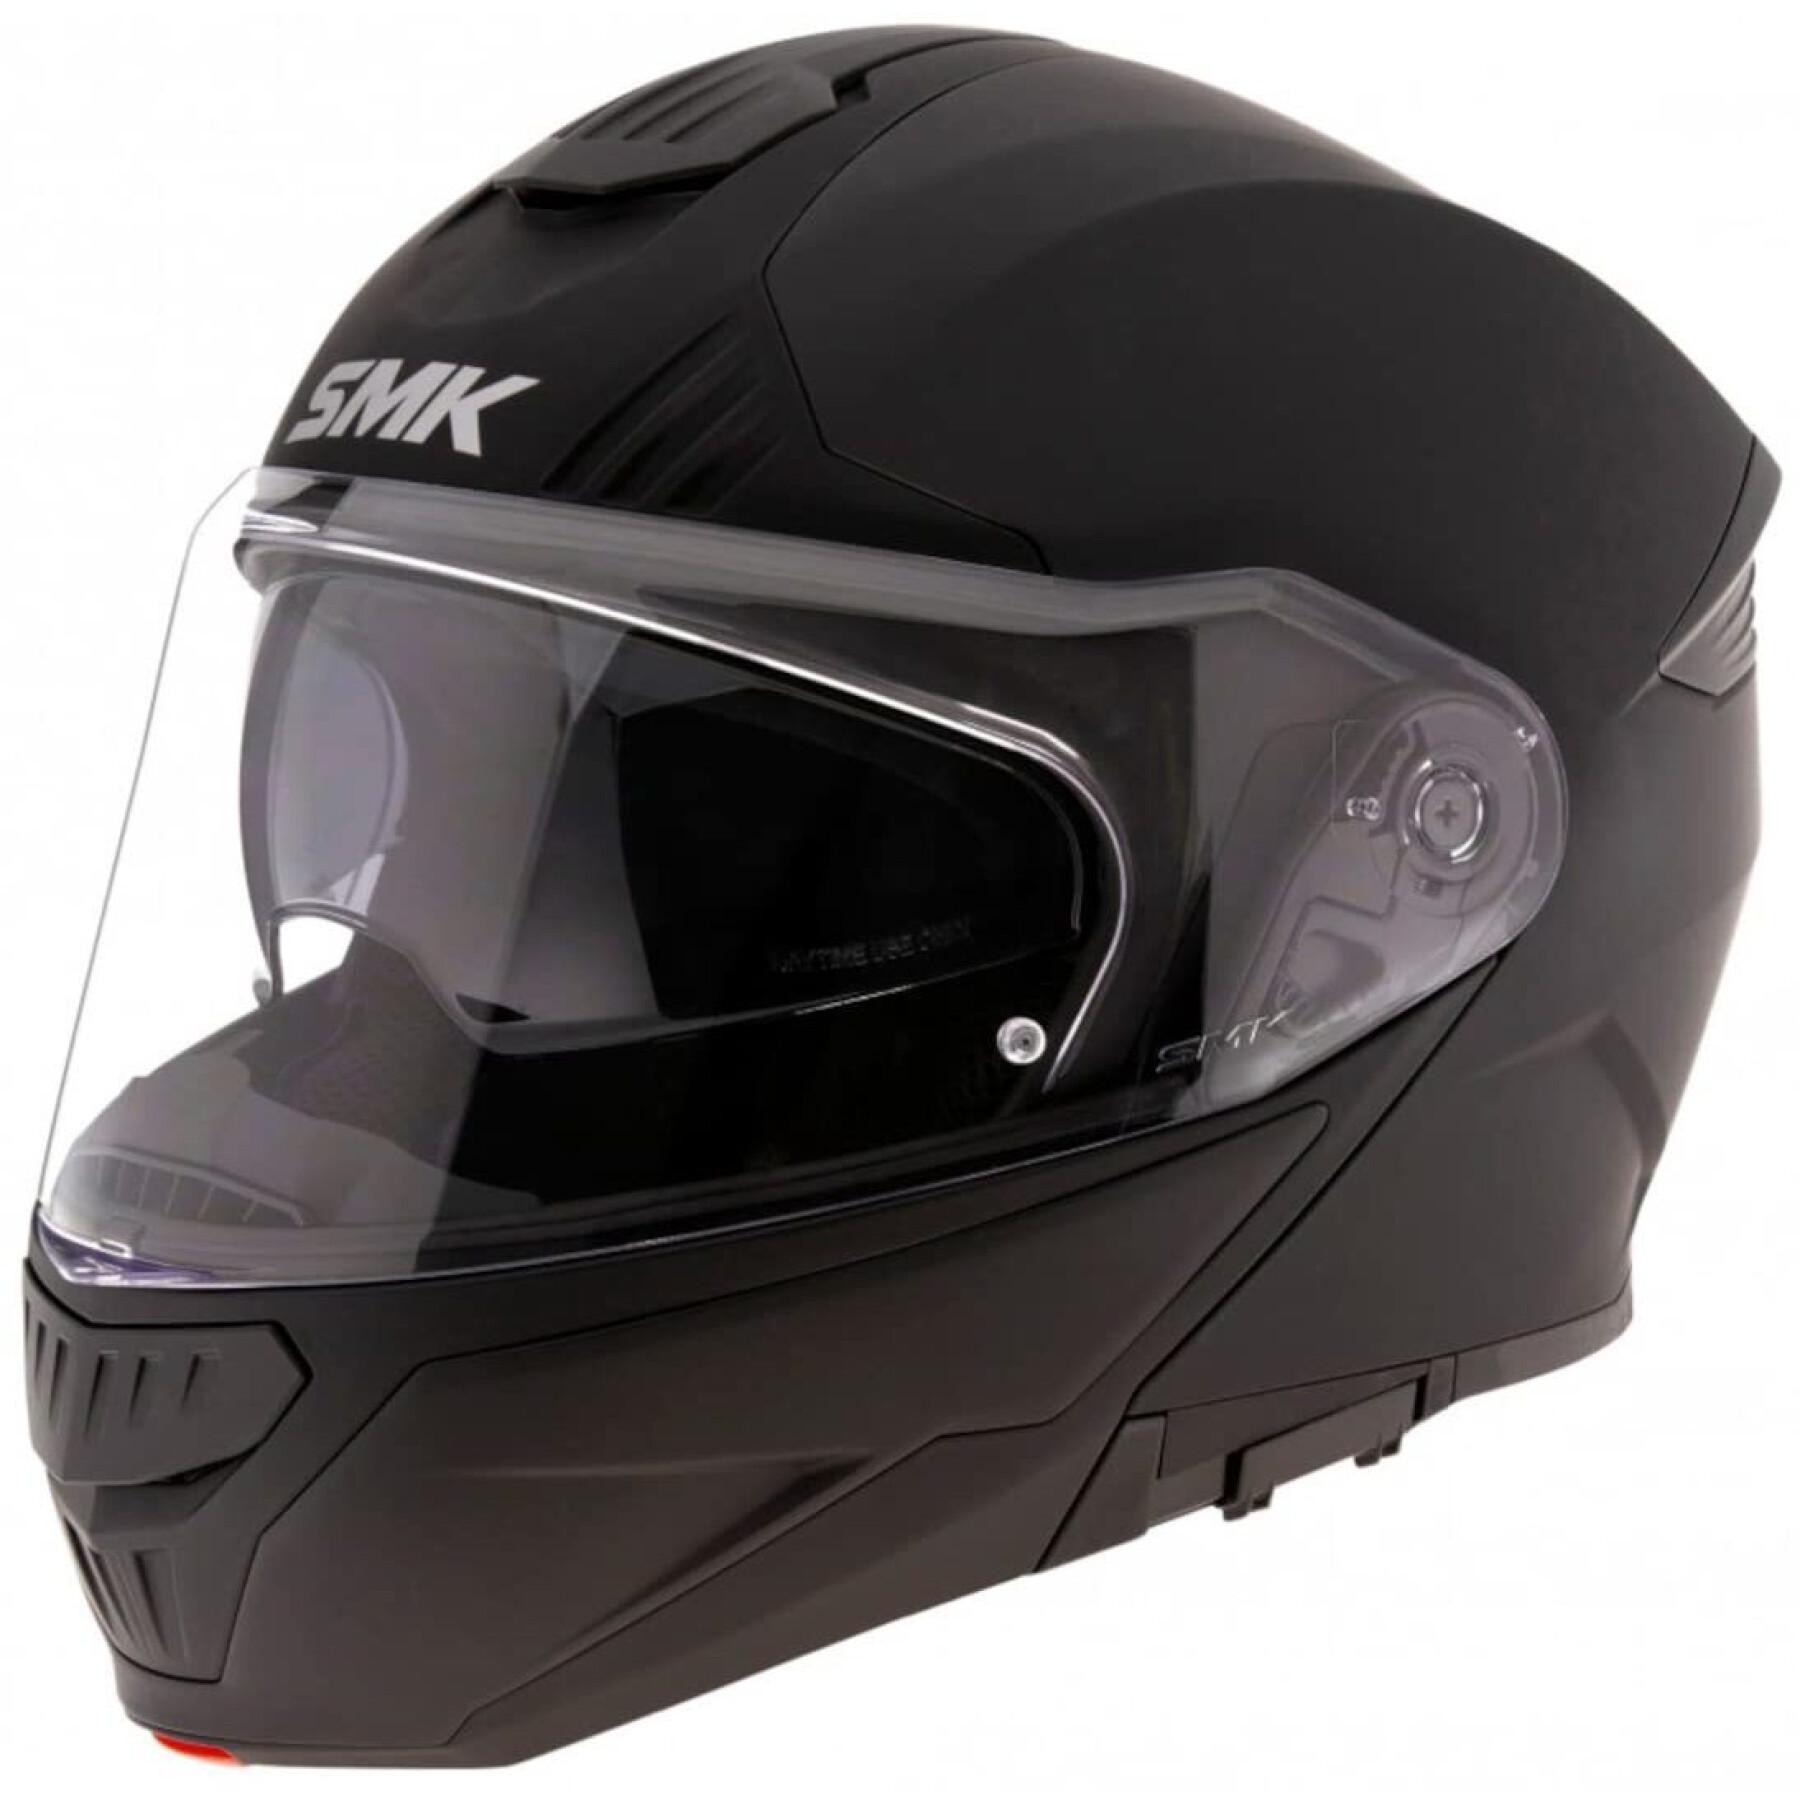 Modular motorcycle helmet SMK gullwing